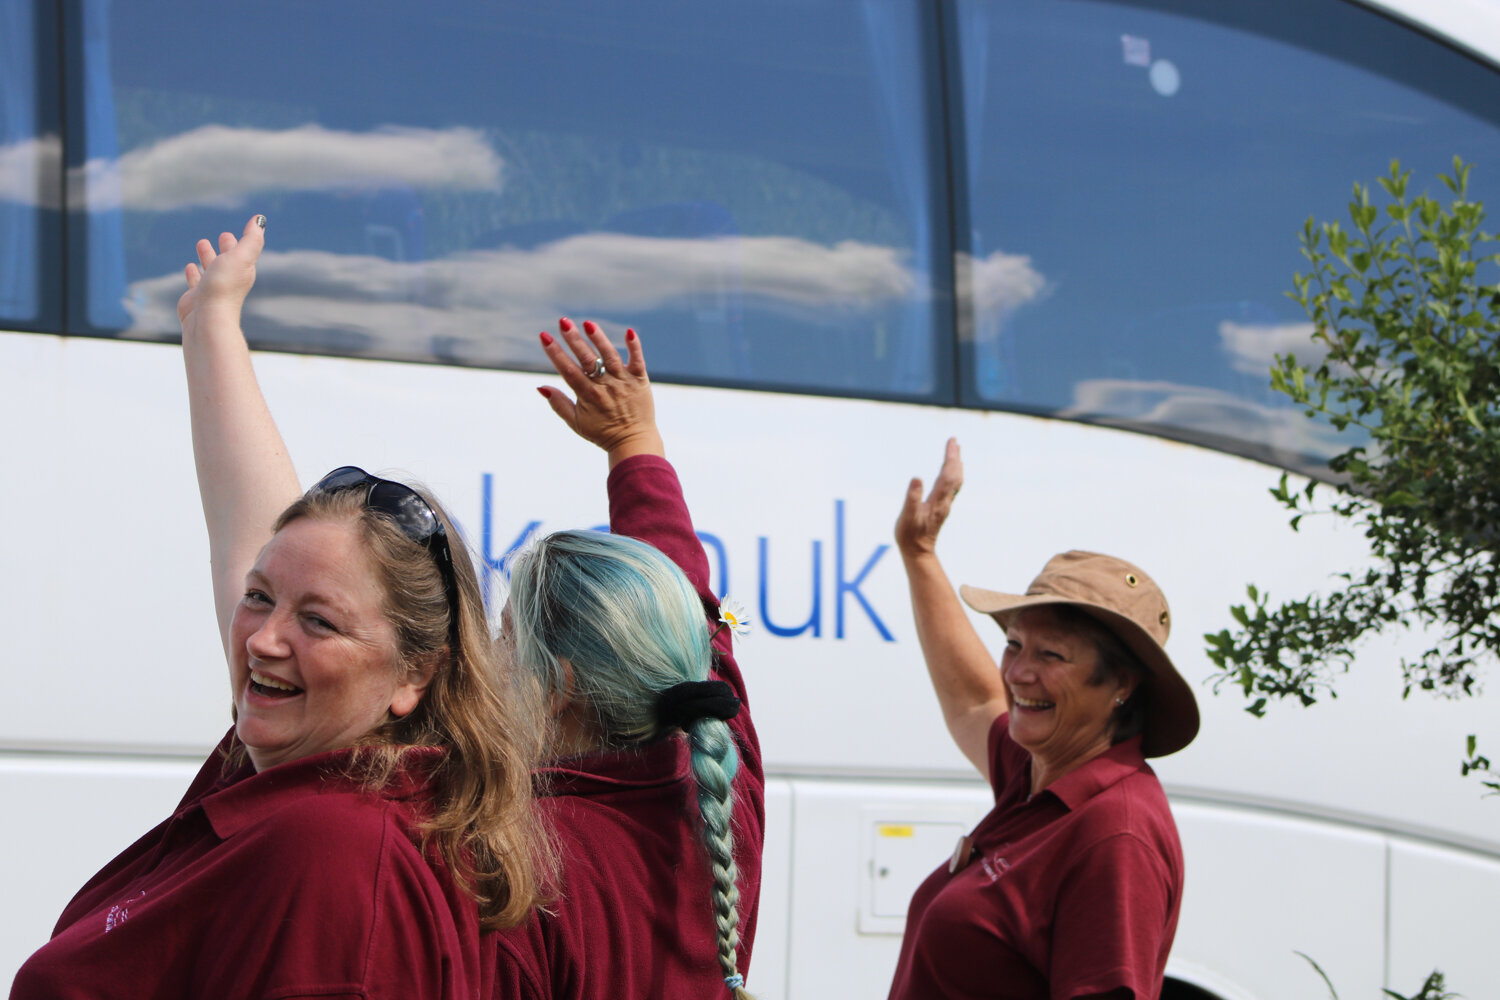 Butser staff waving to school trip coach